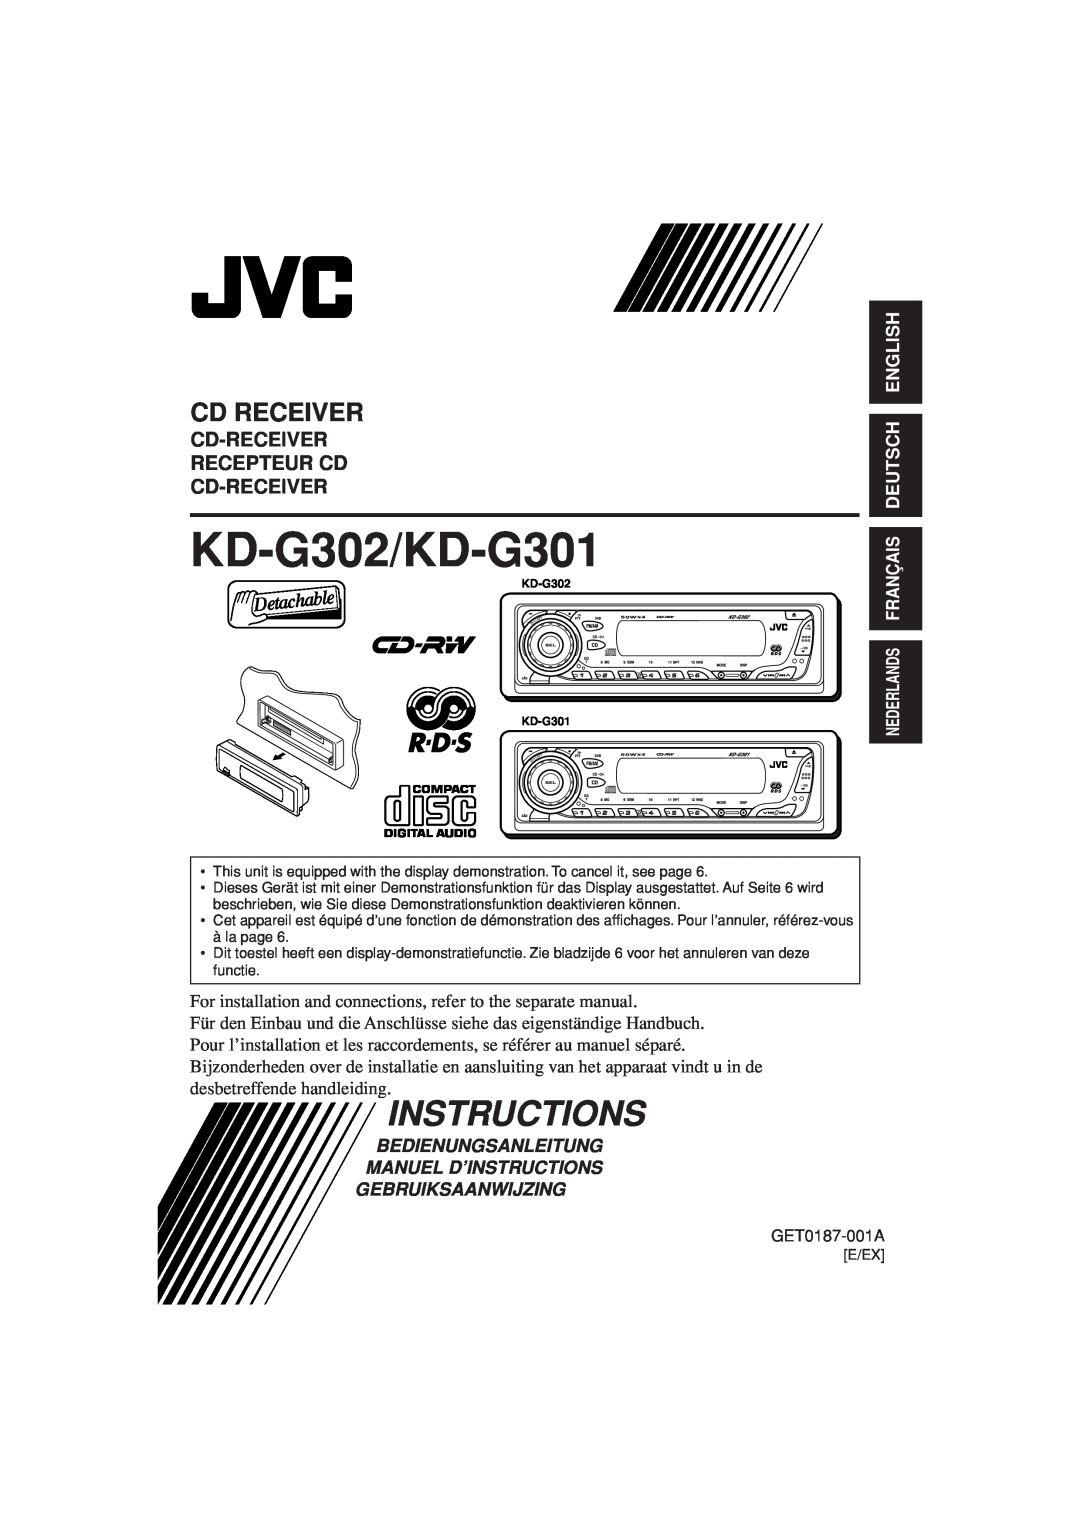 JVC manual Cd Receiver, Cd-Receiver Recepteur Cd Cd-Receiver, English Deutsch, KD-G302/KD-G301, Instructions 